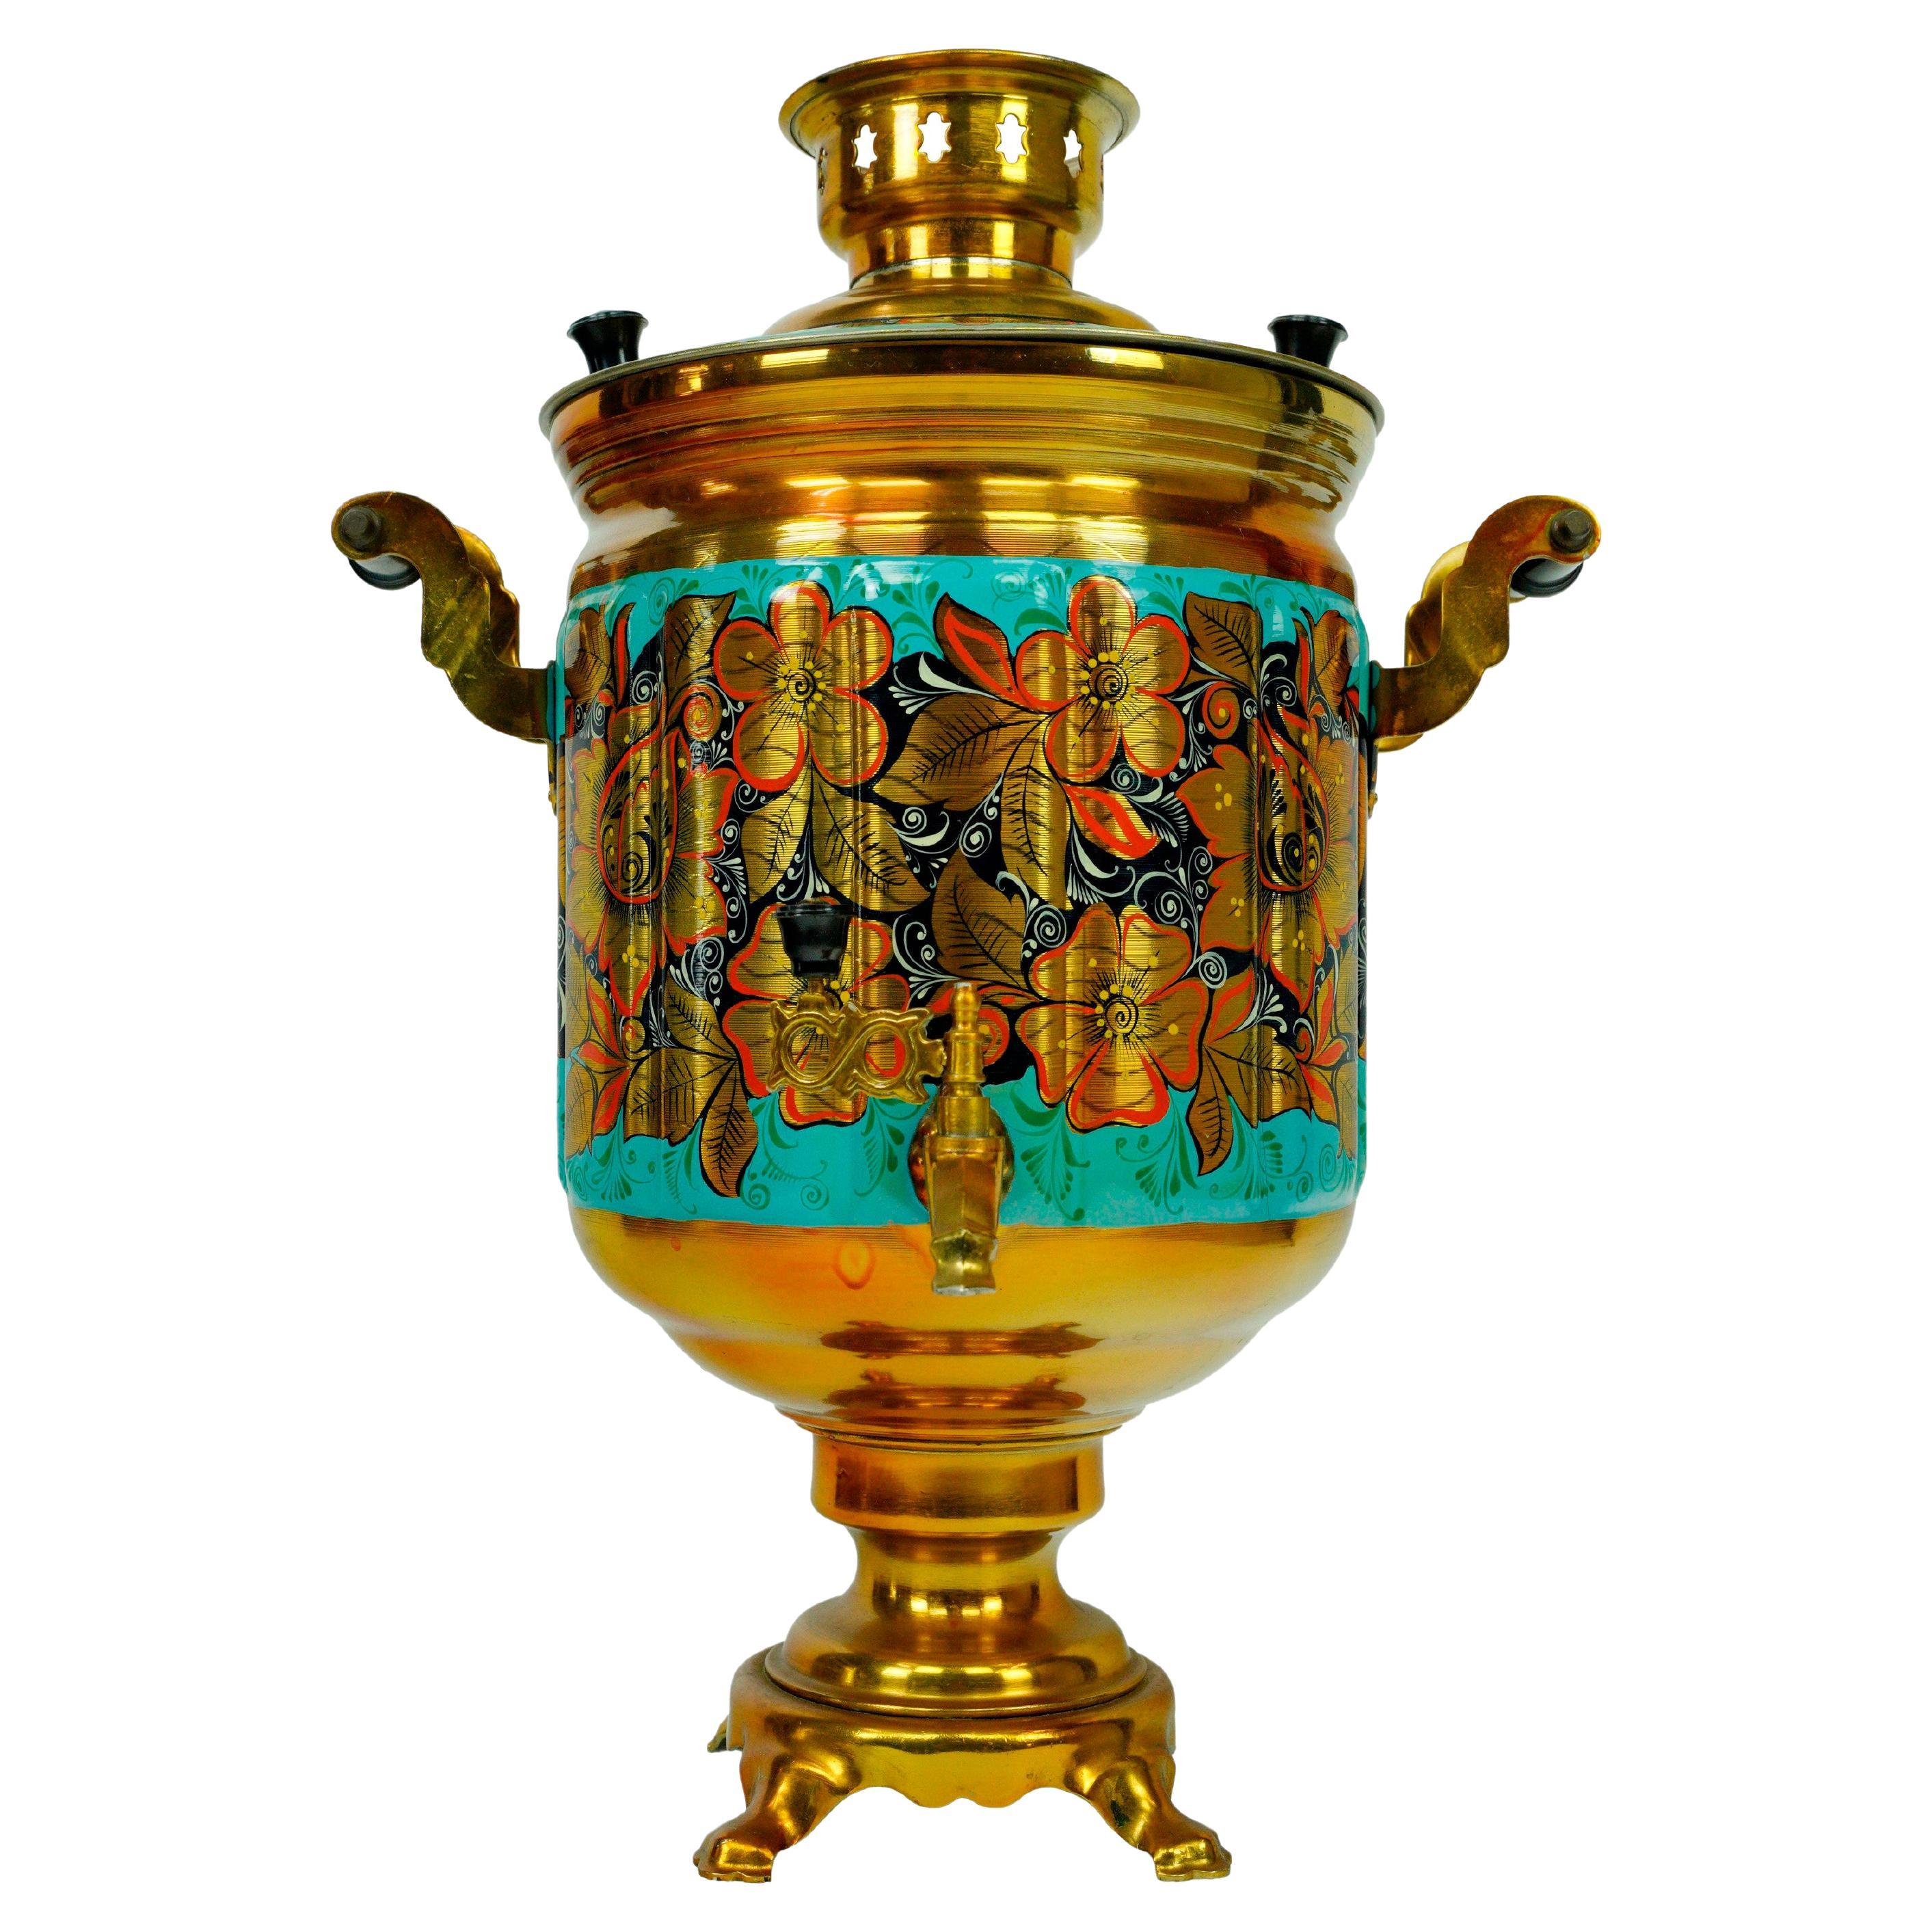 Soviet Russian Floral Brass Electric Samovar Teapot Antique